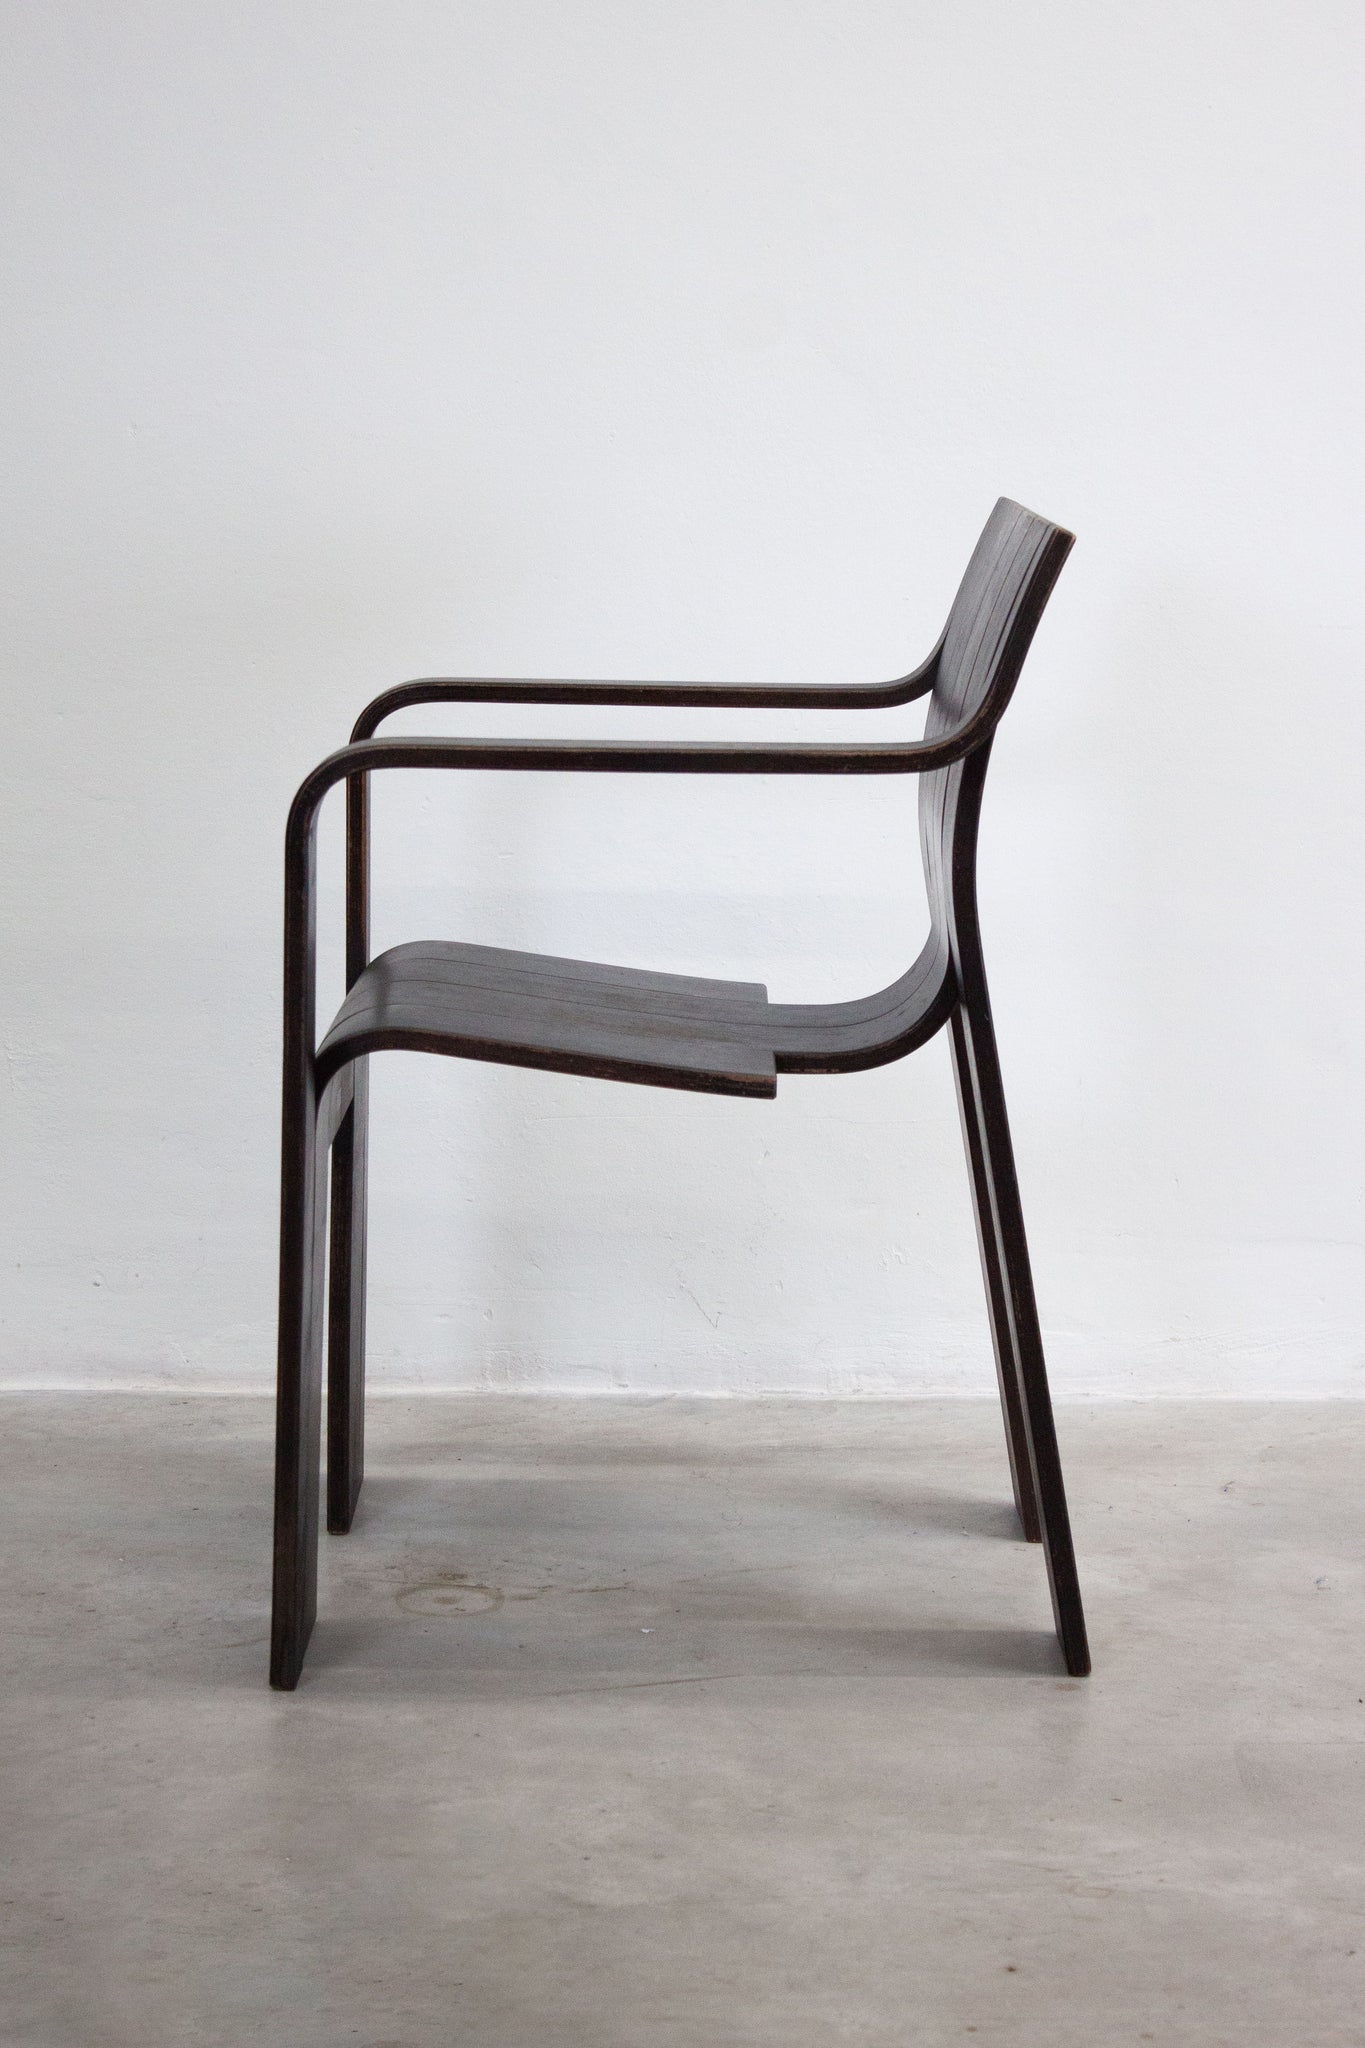 Castelijn Strip Chairs with Armrest by Gijs Bakker (Black)